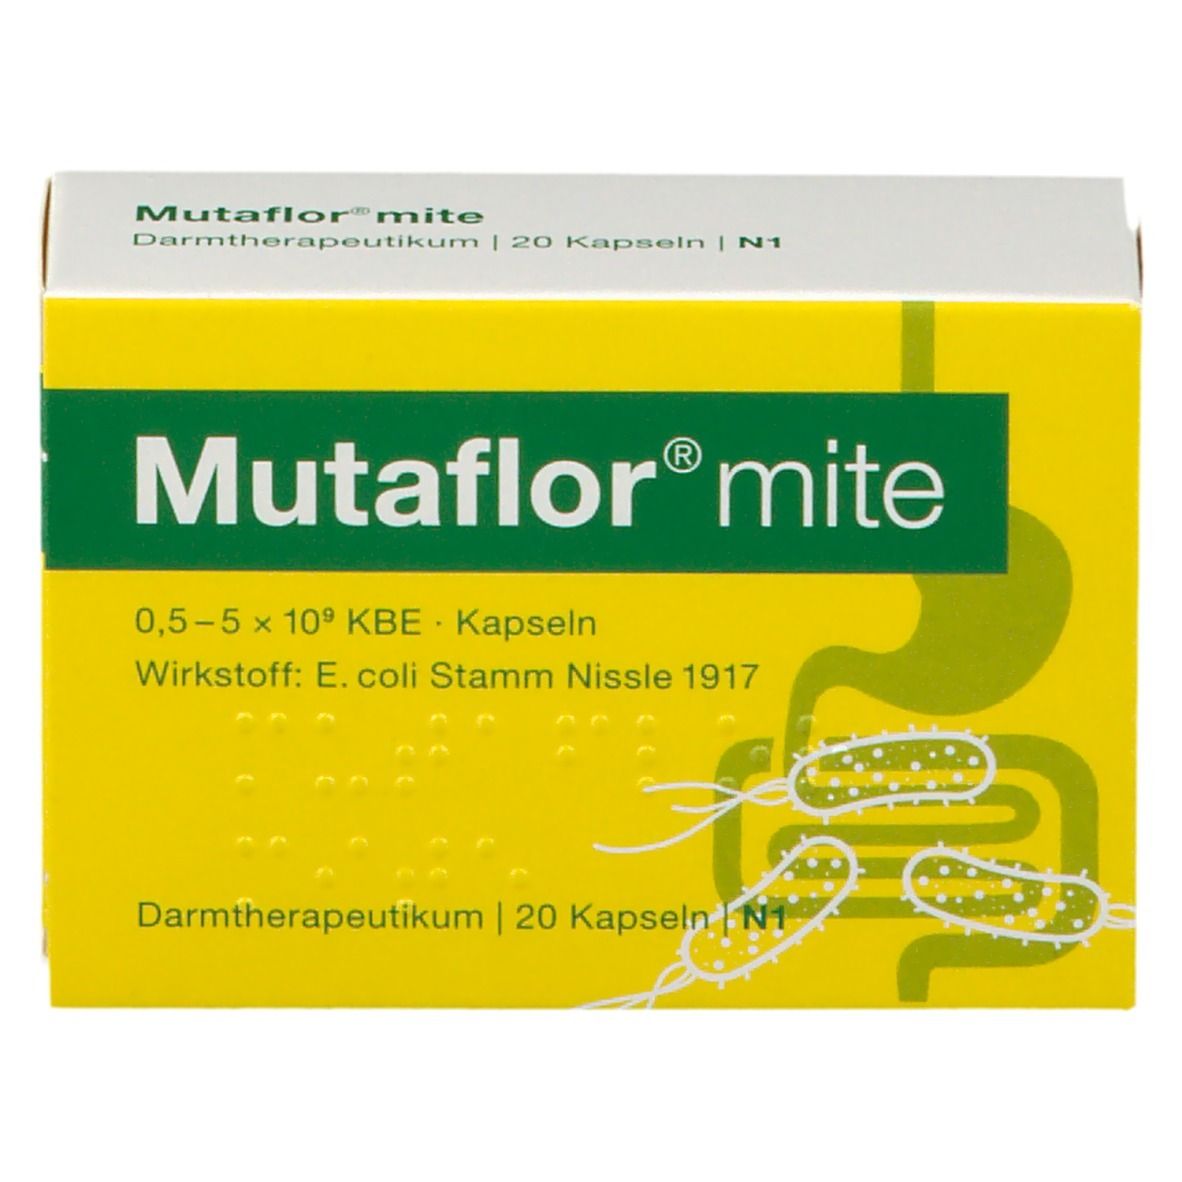 Mutaflor® mite